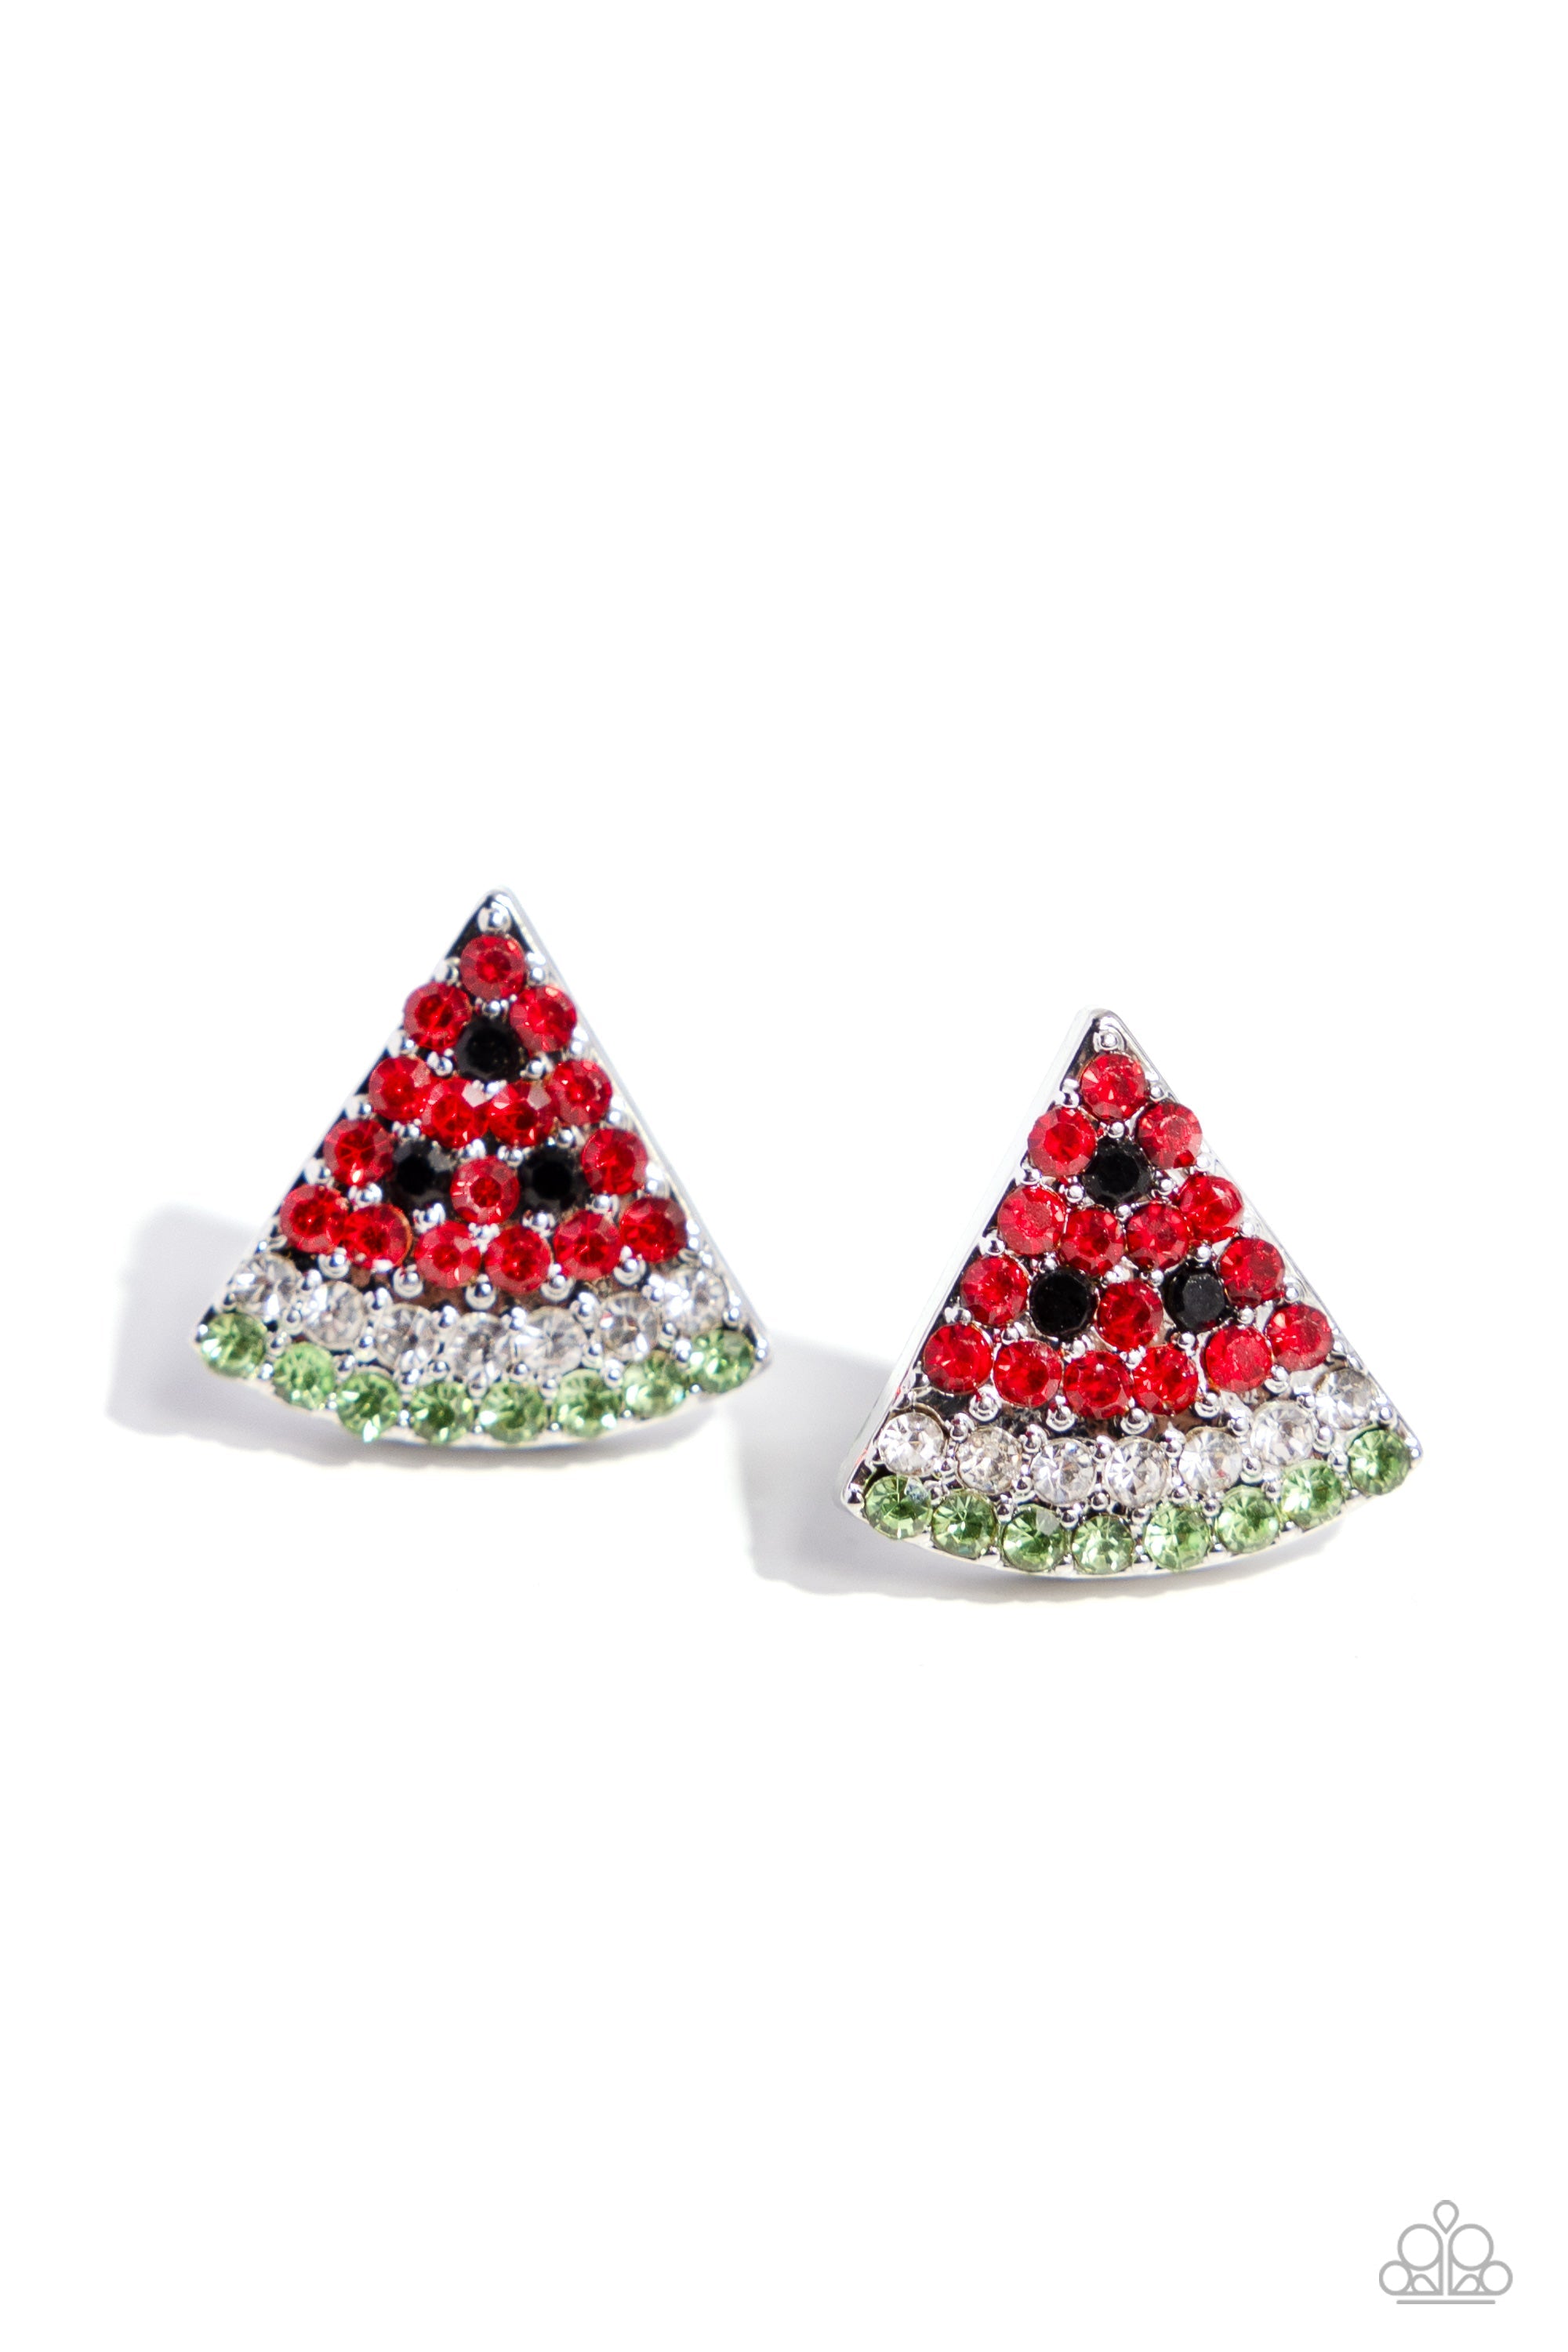 Watermelon Slice Red Rhinestone Earrings - Paparazzi Accessories- lightbox - CarasShop.com - $5 Jewelry by Cara Jewels